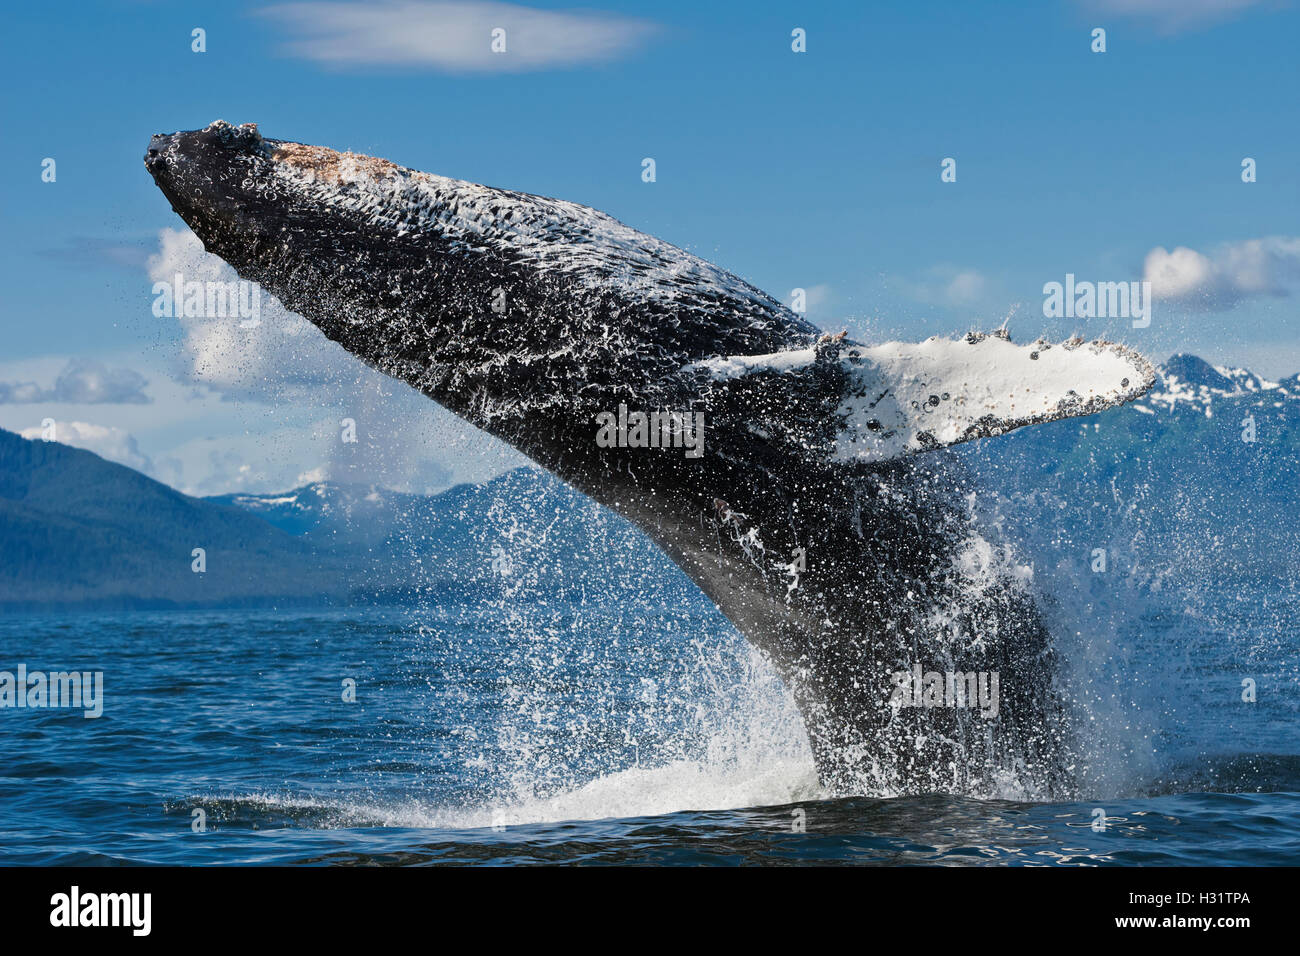 Humpback Whale (Megaptera novaeangliae) breaching very close to the camera. Alaska, USA, Pacific Ocean. Photo Copyright © Brando Stock Photo